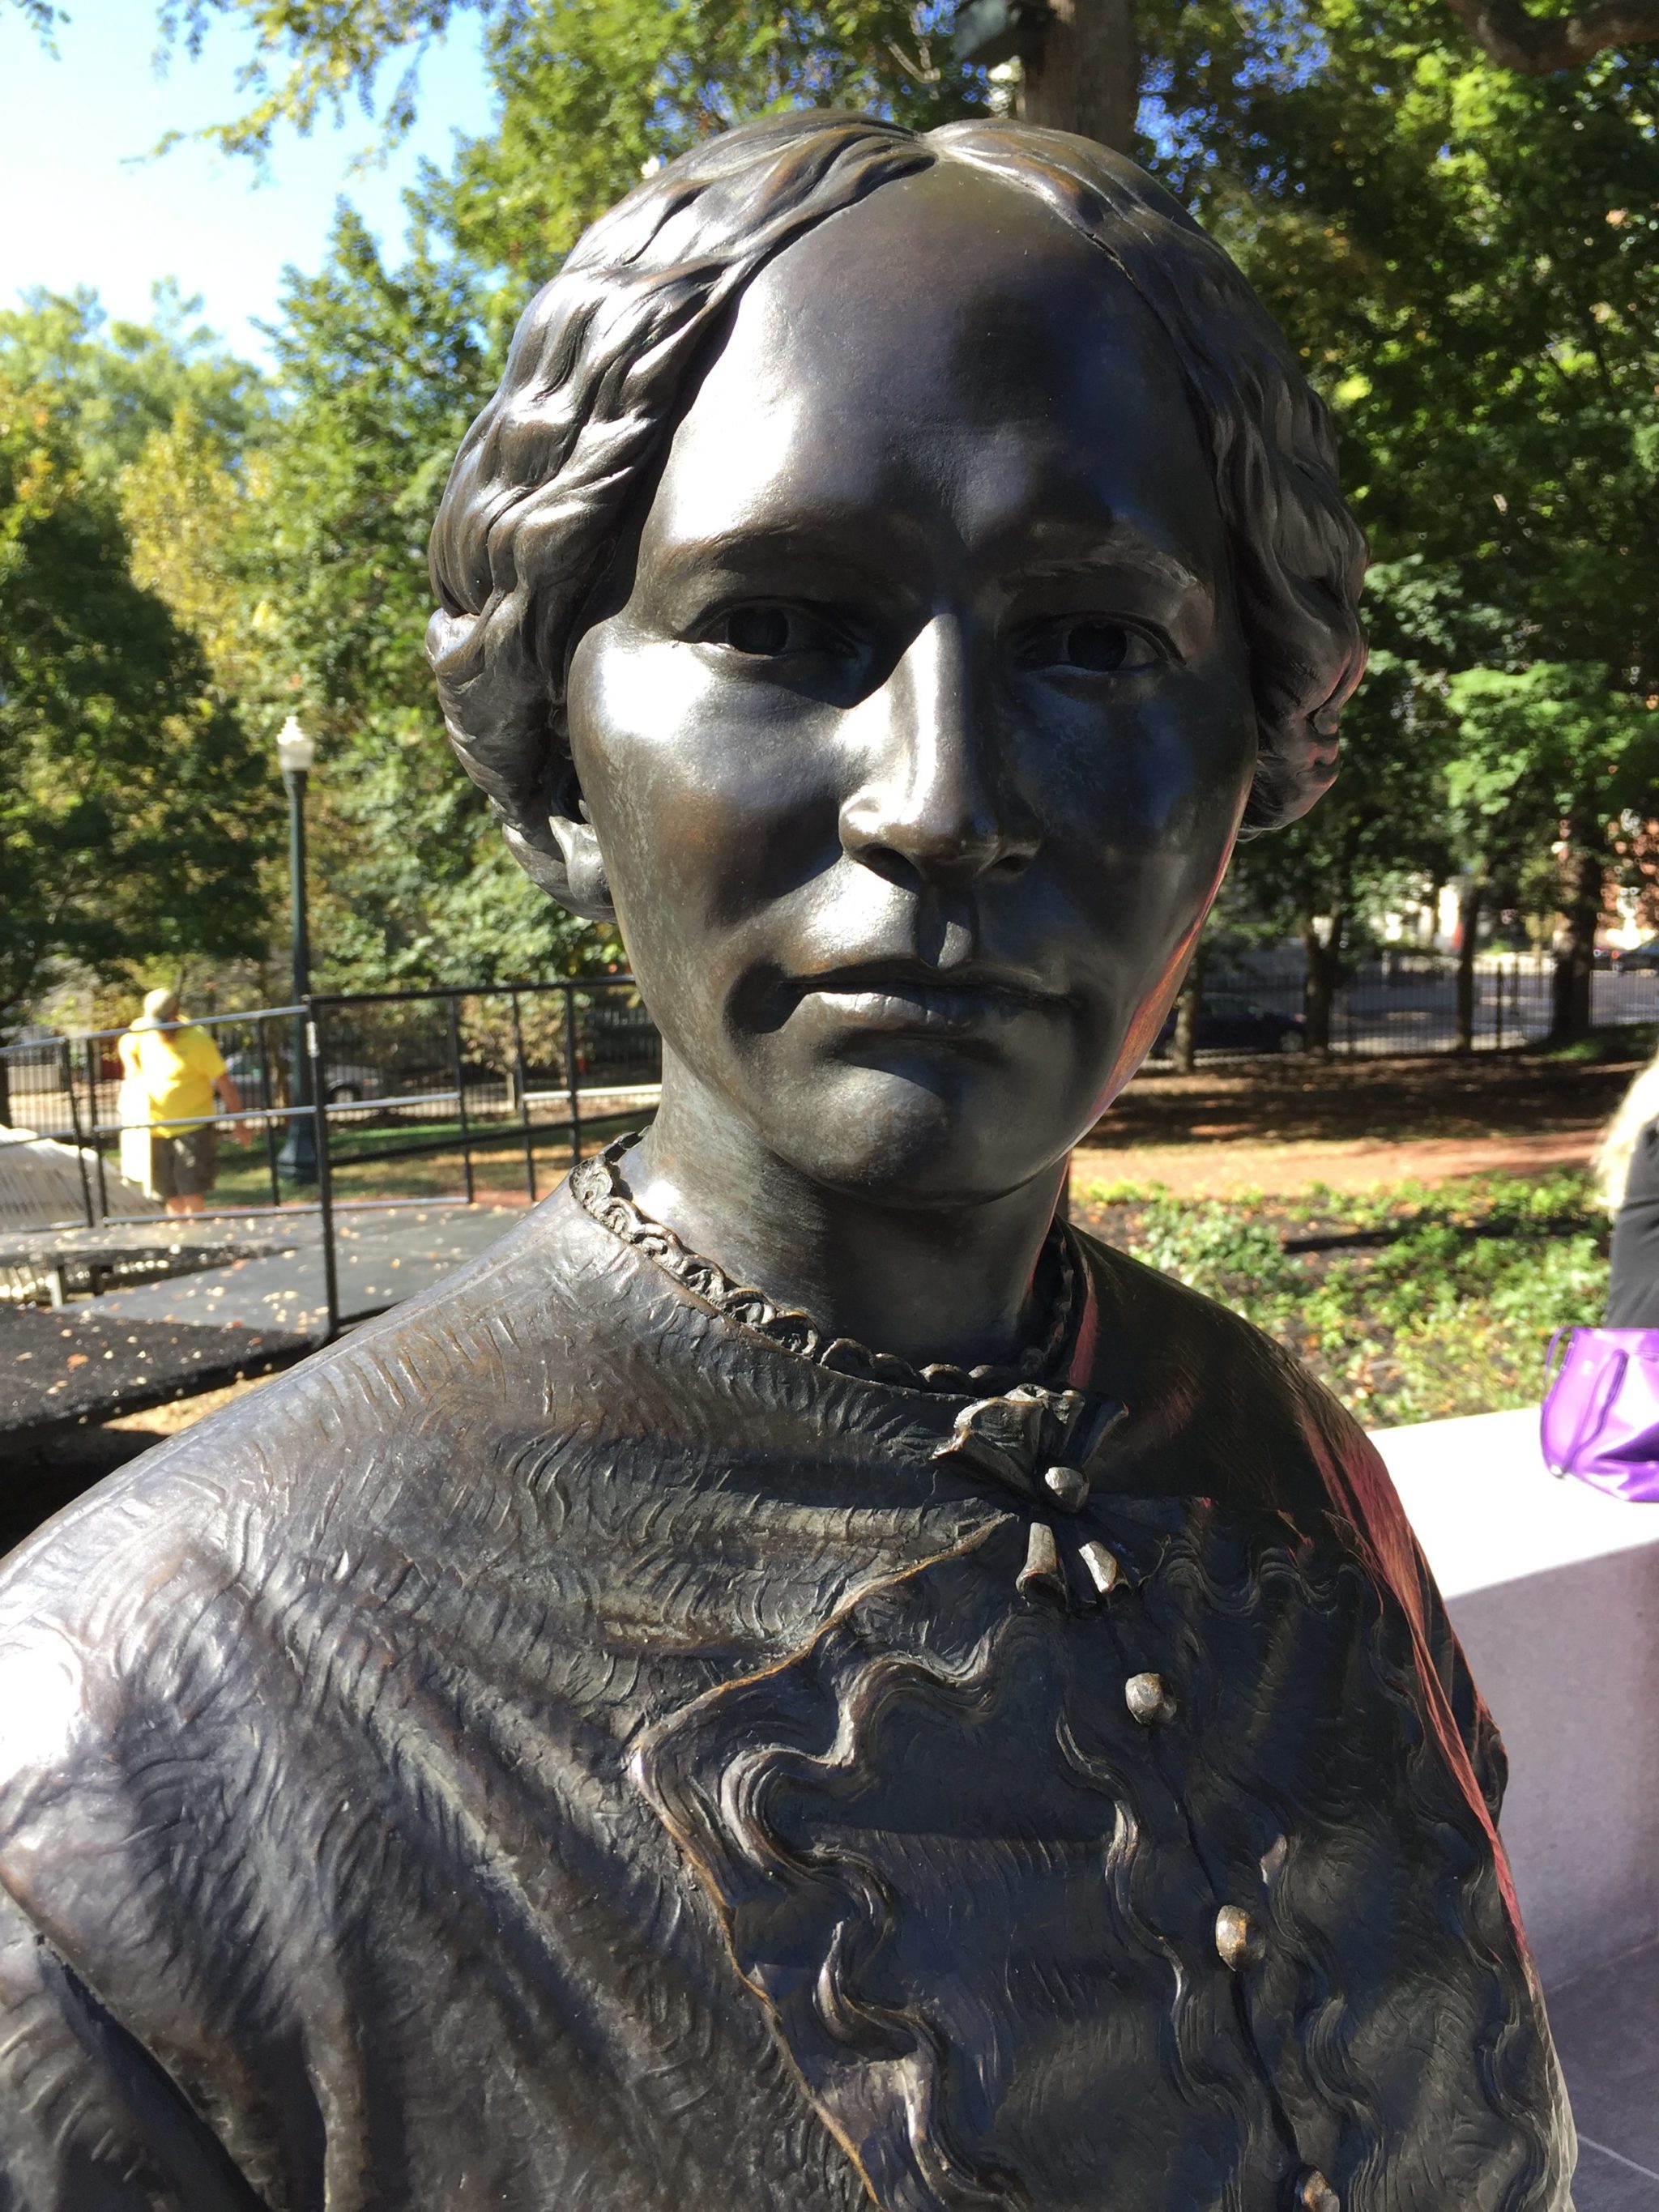 The Virginia Women's Monument in Richmond, VA